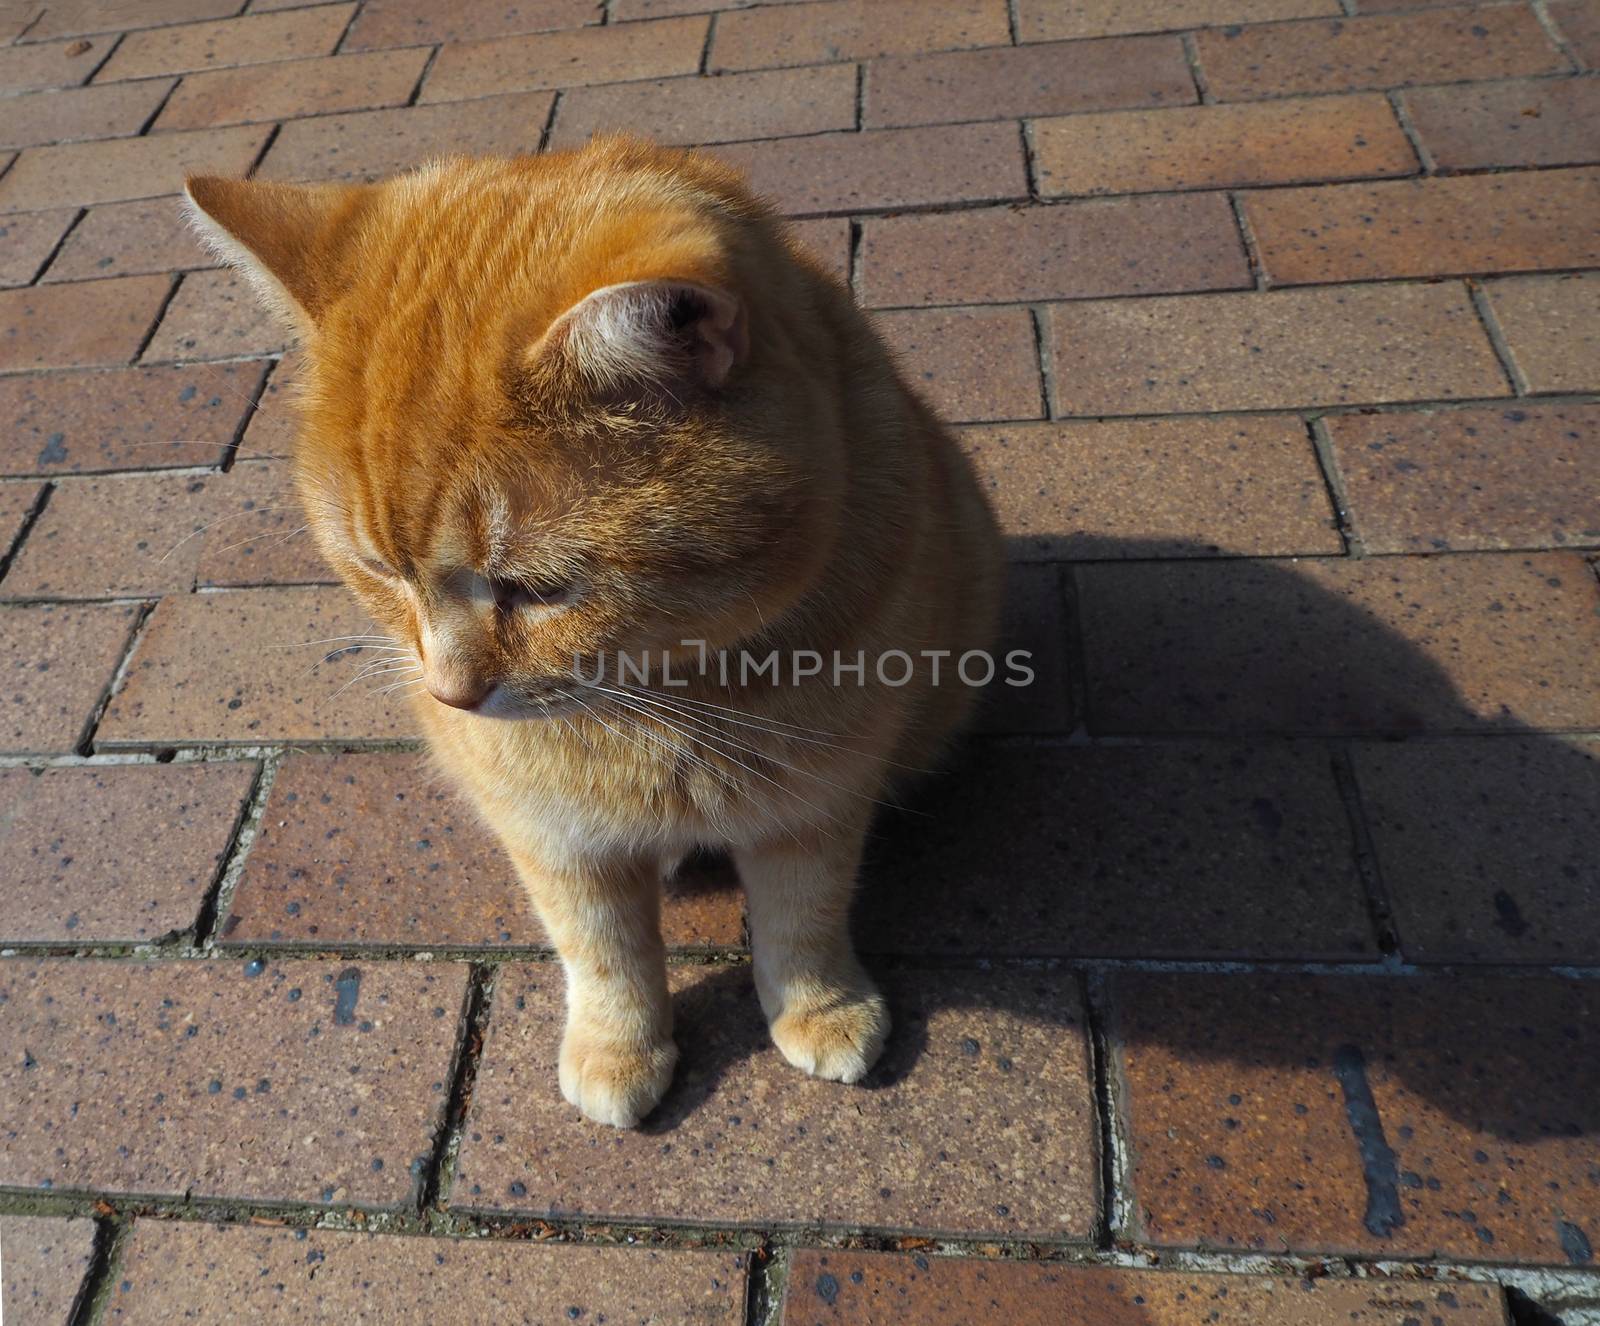 ginger rehead cat on the brick paving floor  by Henkeova